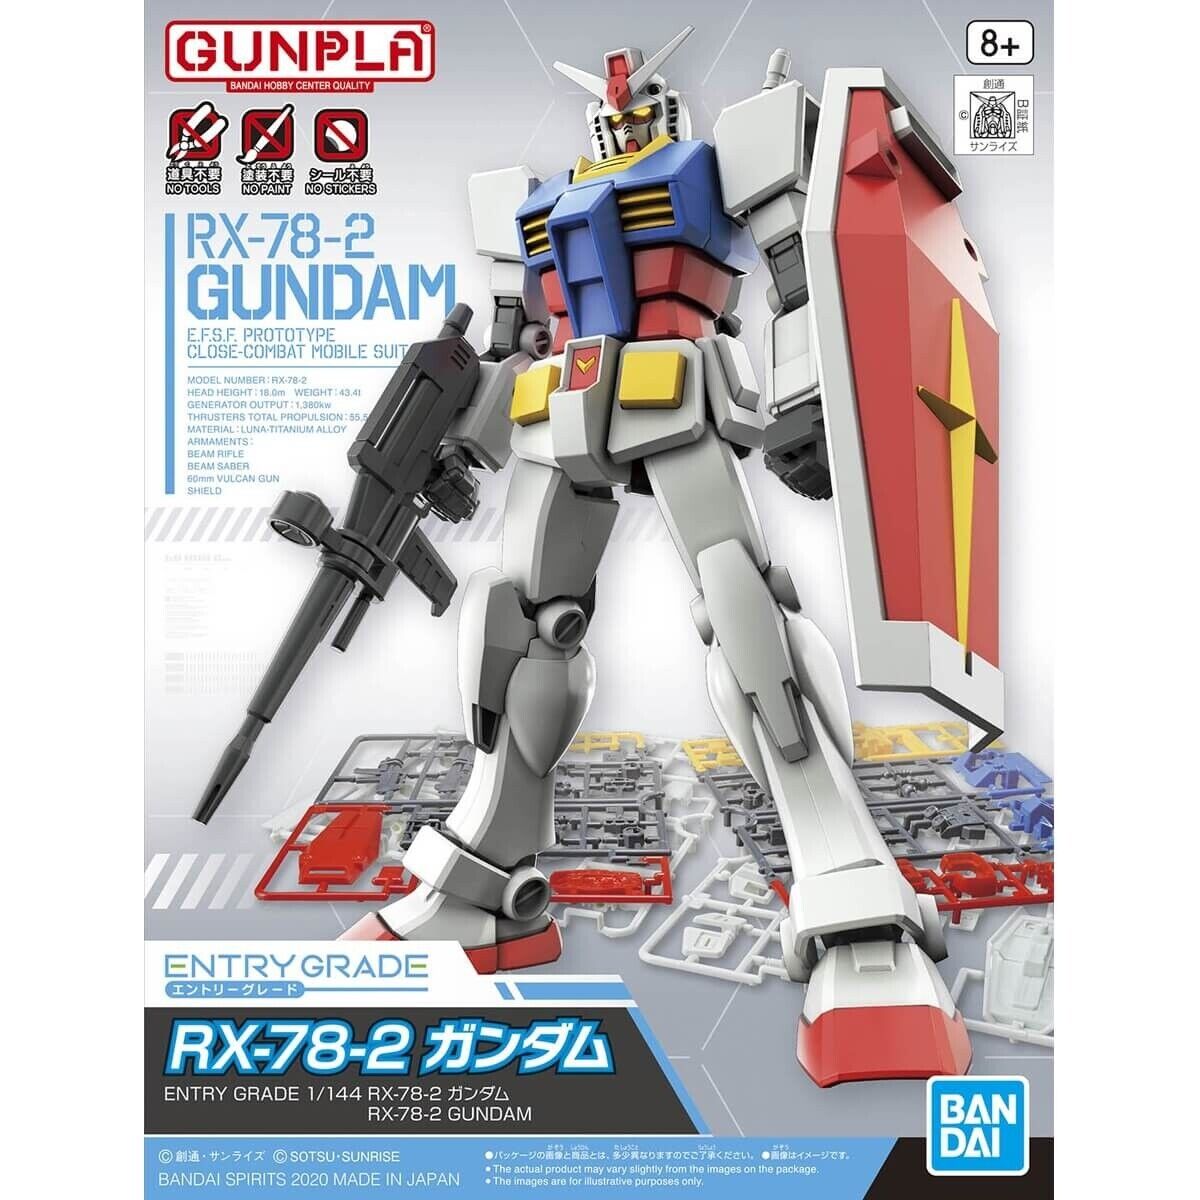 BANDAI 5061064 1/144 RX-78-2 Gundam "Mobile Suit Gundam", Bandai Spirits Entry Grade